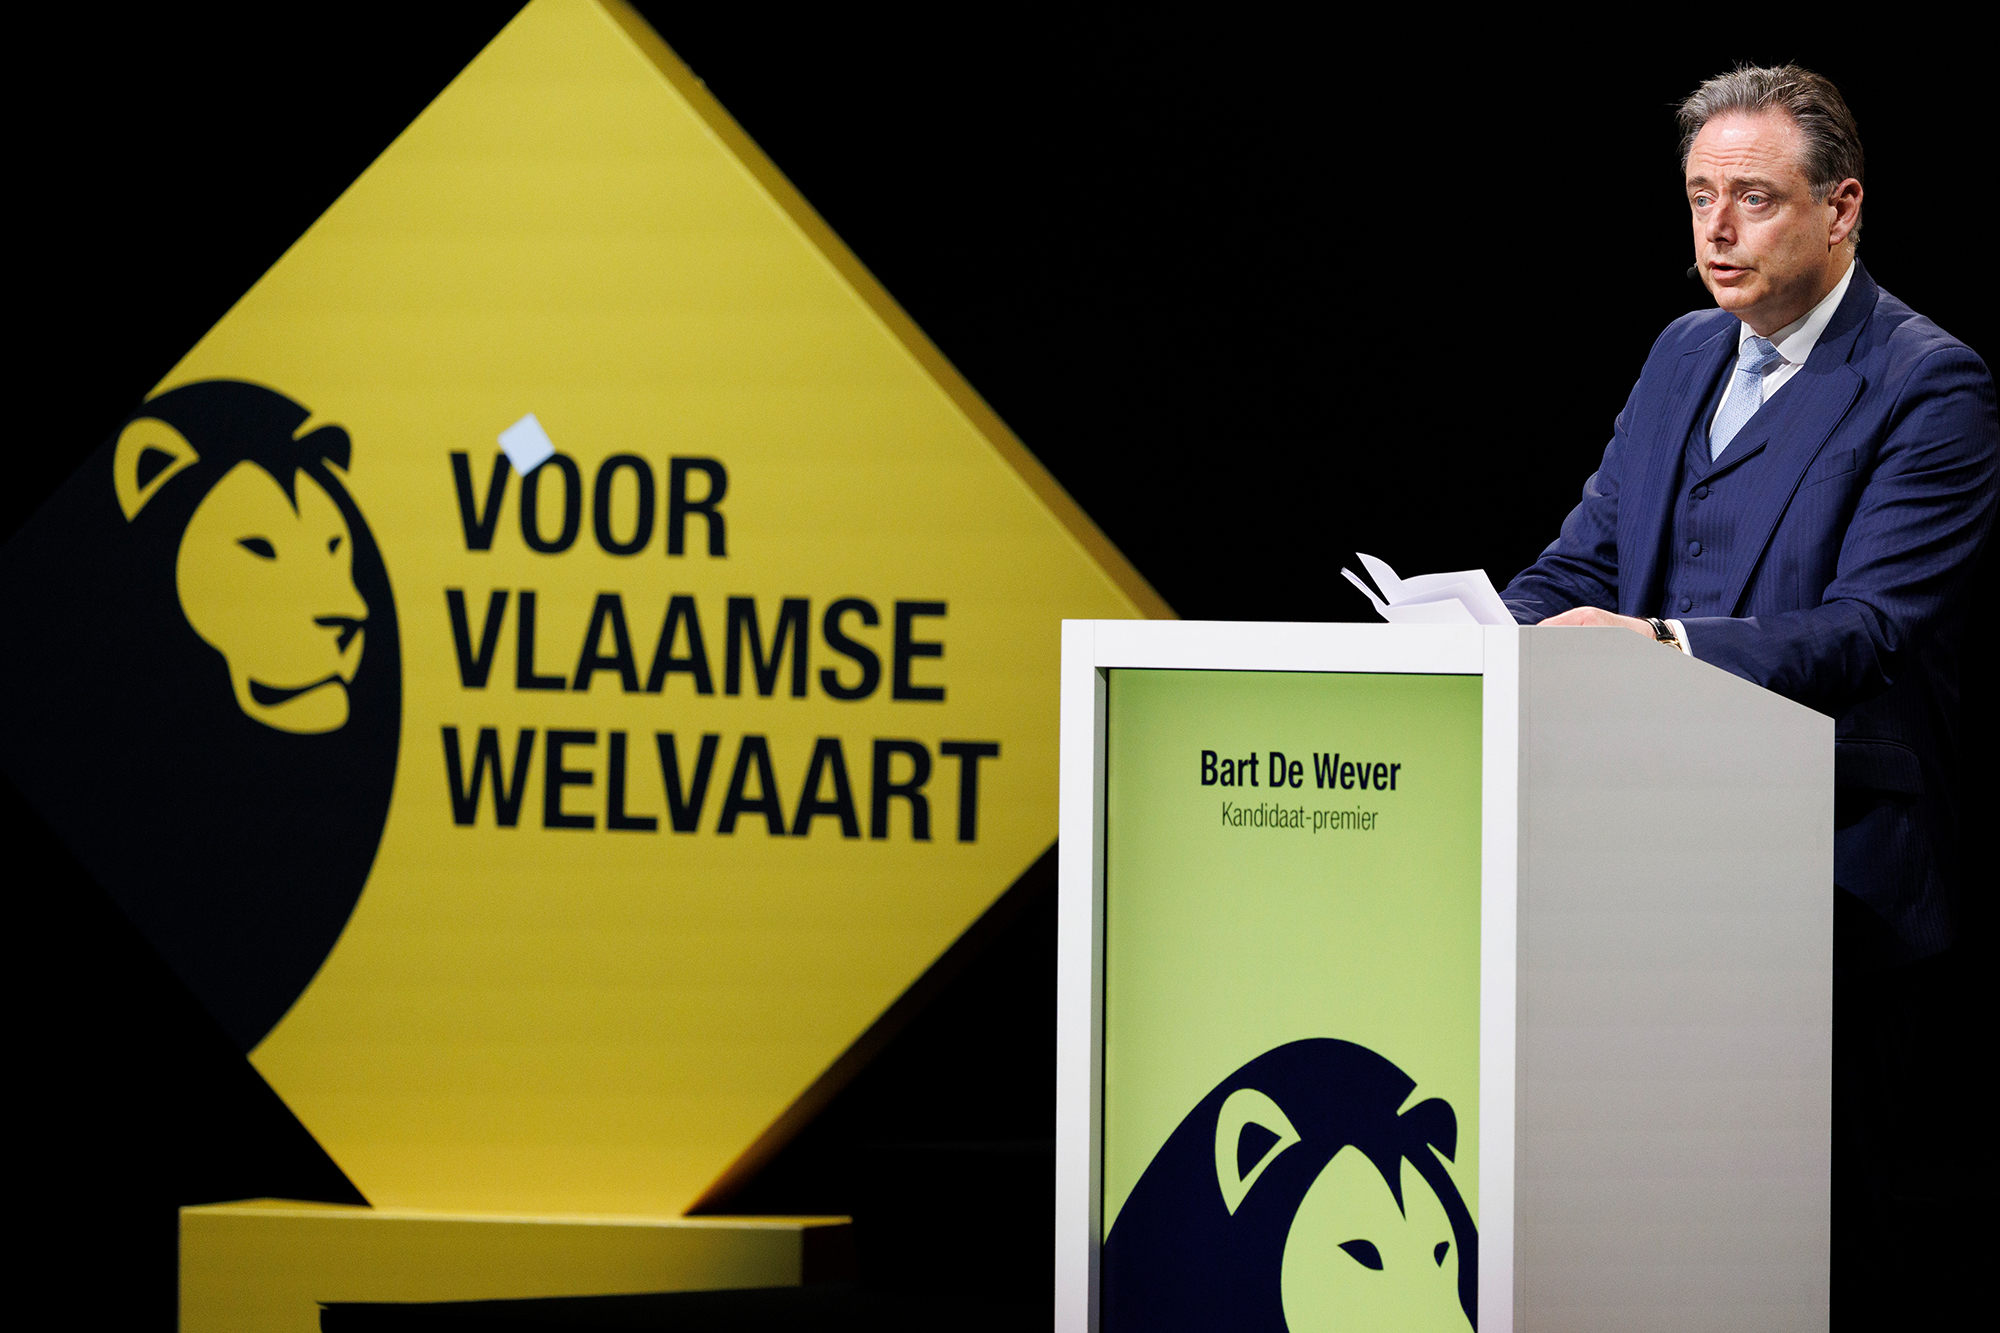 Bart De Wever beim N-VA-Kongress am 28. April in Gent